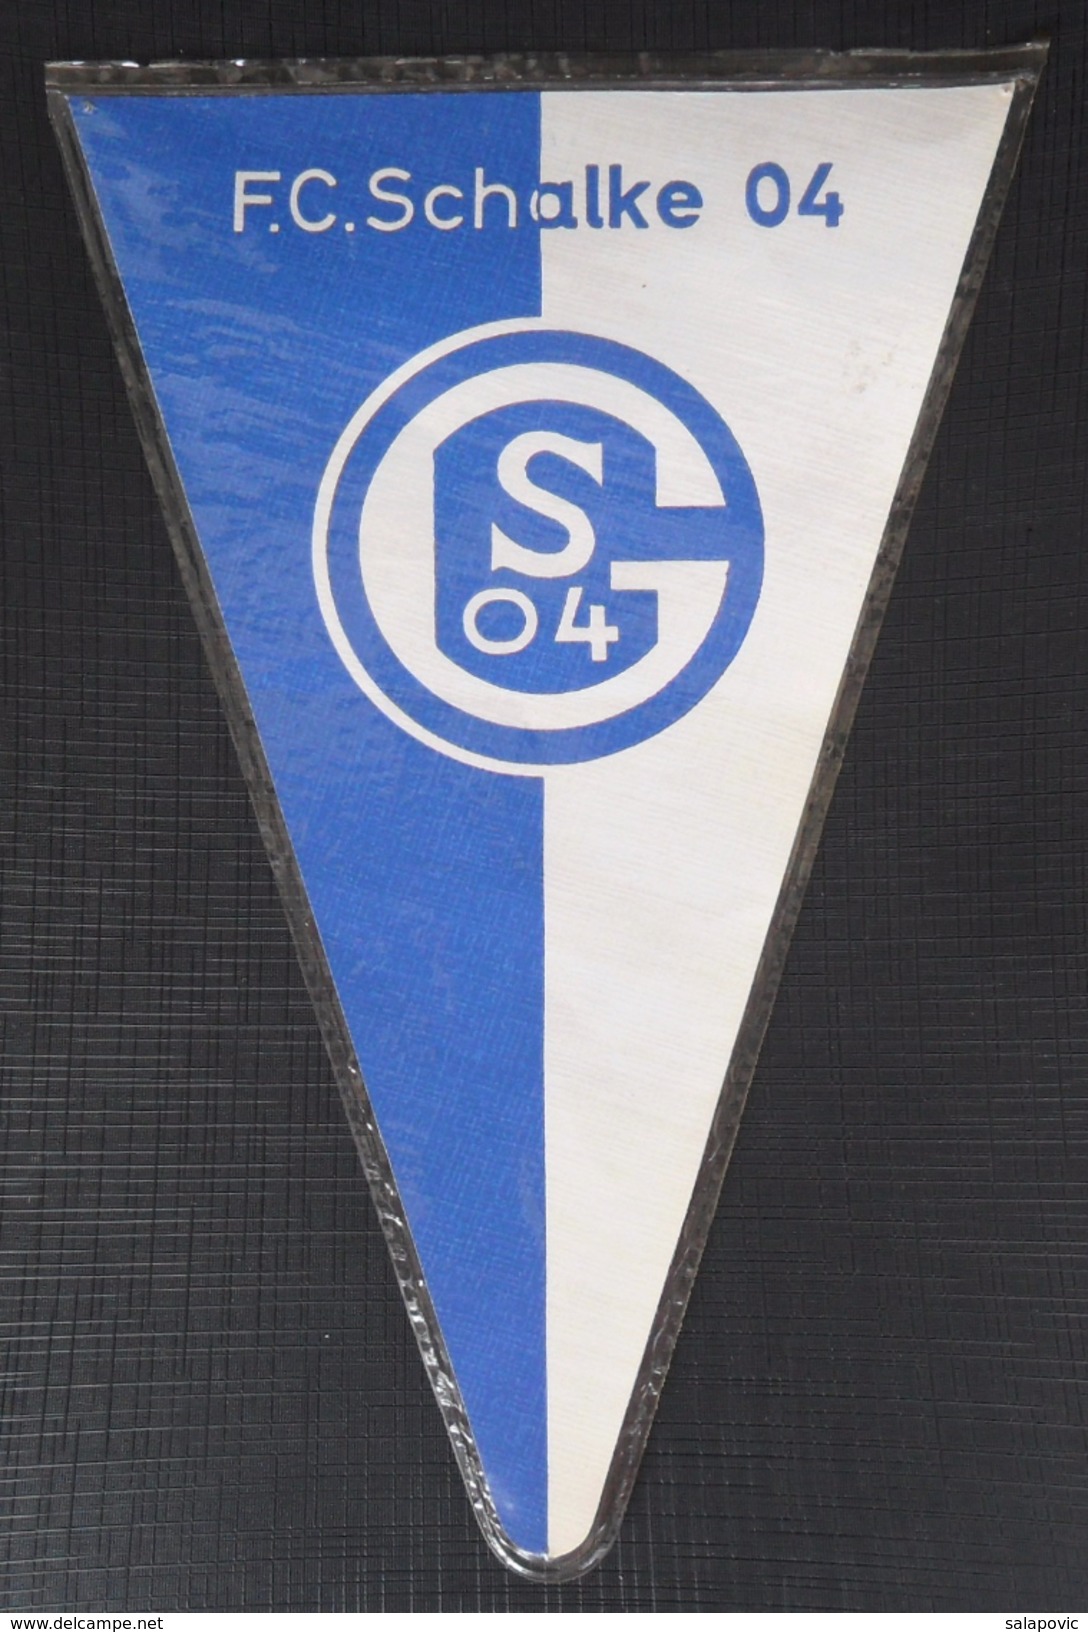 FC Gelsenkirchen-Schalke 04 GERMANY FOOTBALL CLUB, SOCCER / FUTBOL / CALCIO OLD PENNANT, SPORTS FLAG - Habillement, Souvenirs & Autres